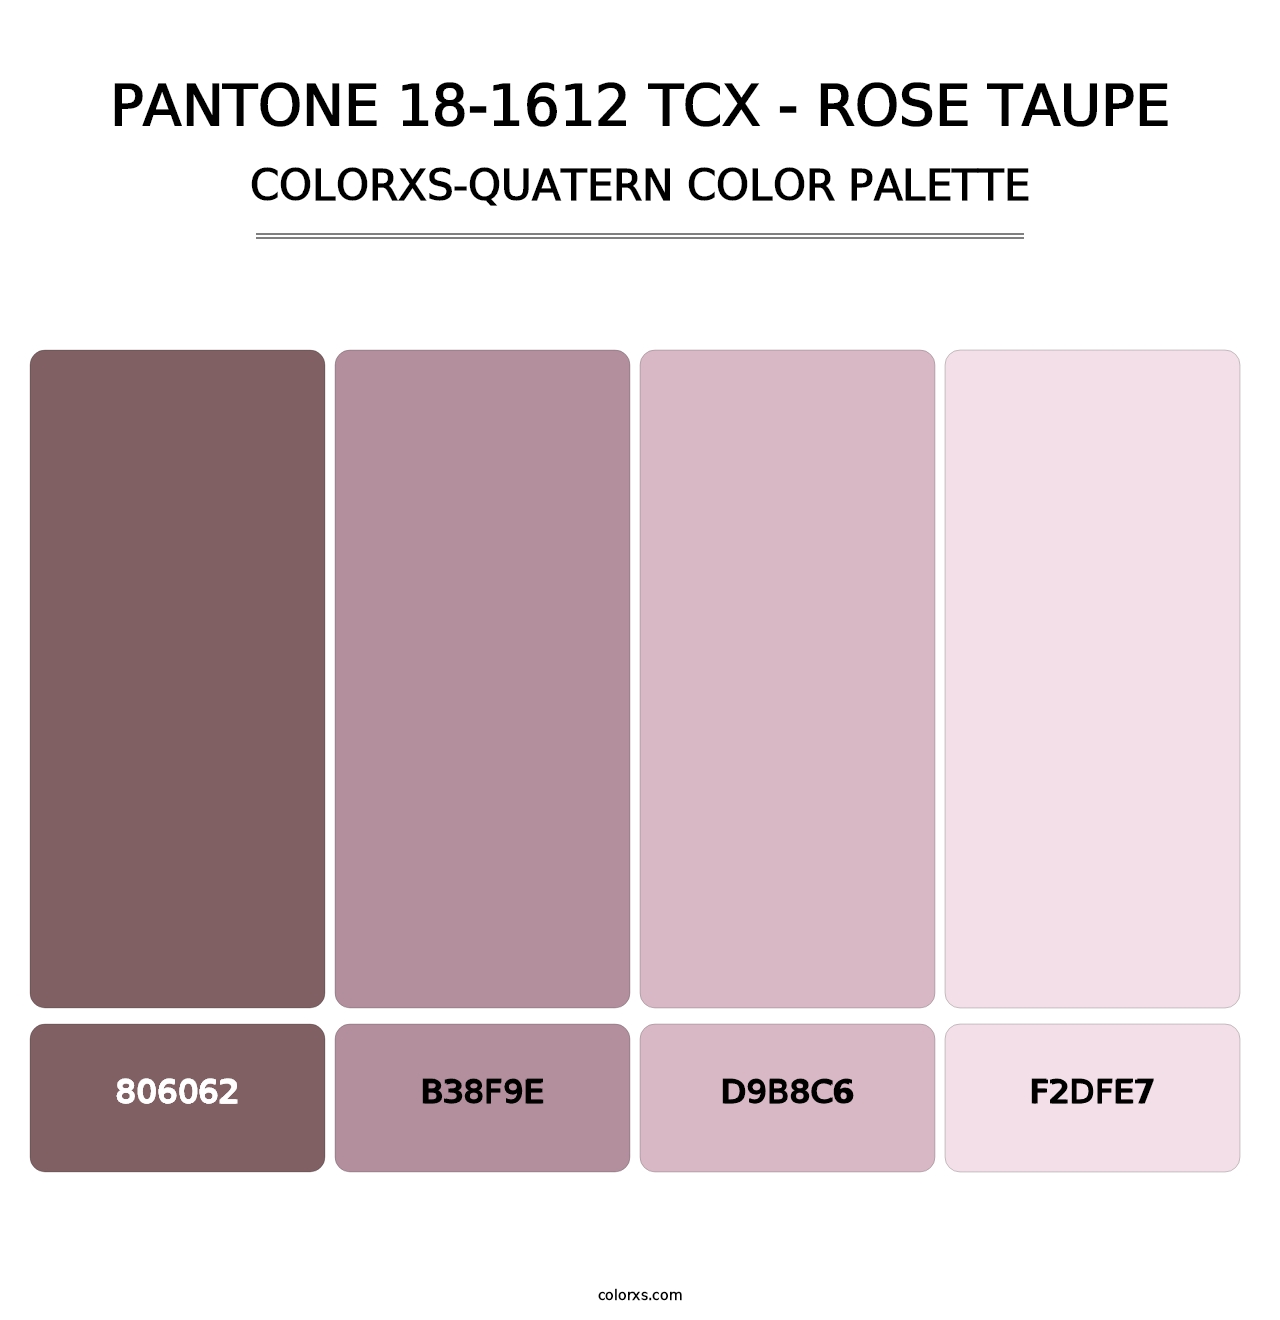 PANTONE 18-1612 TCX - Rose Taupe - Colorxs Quatern Palette